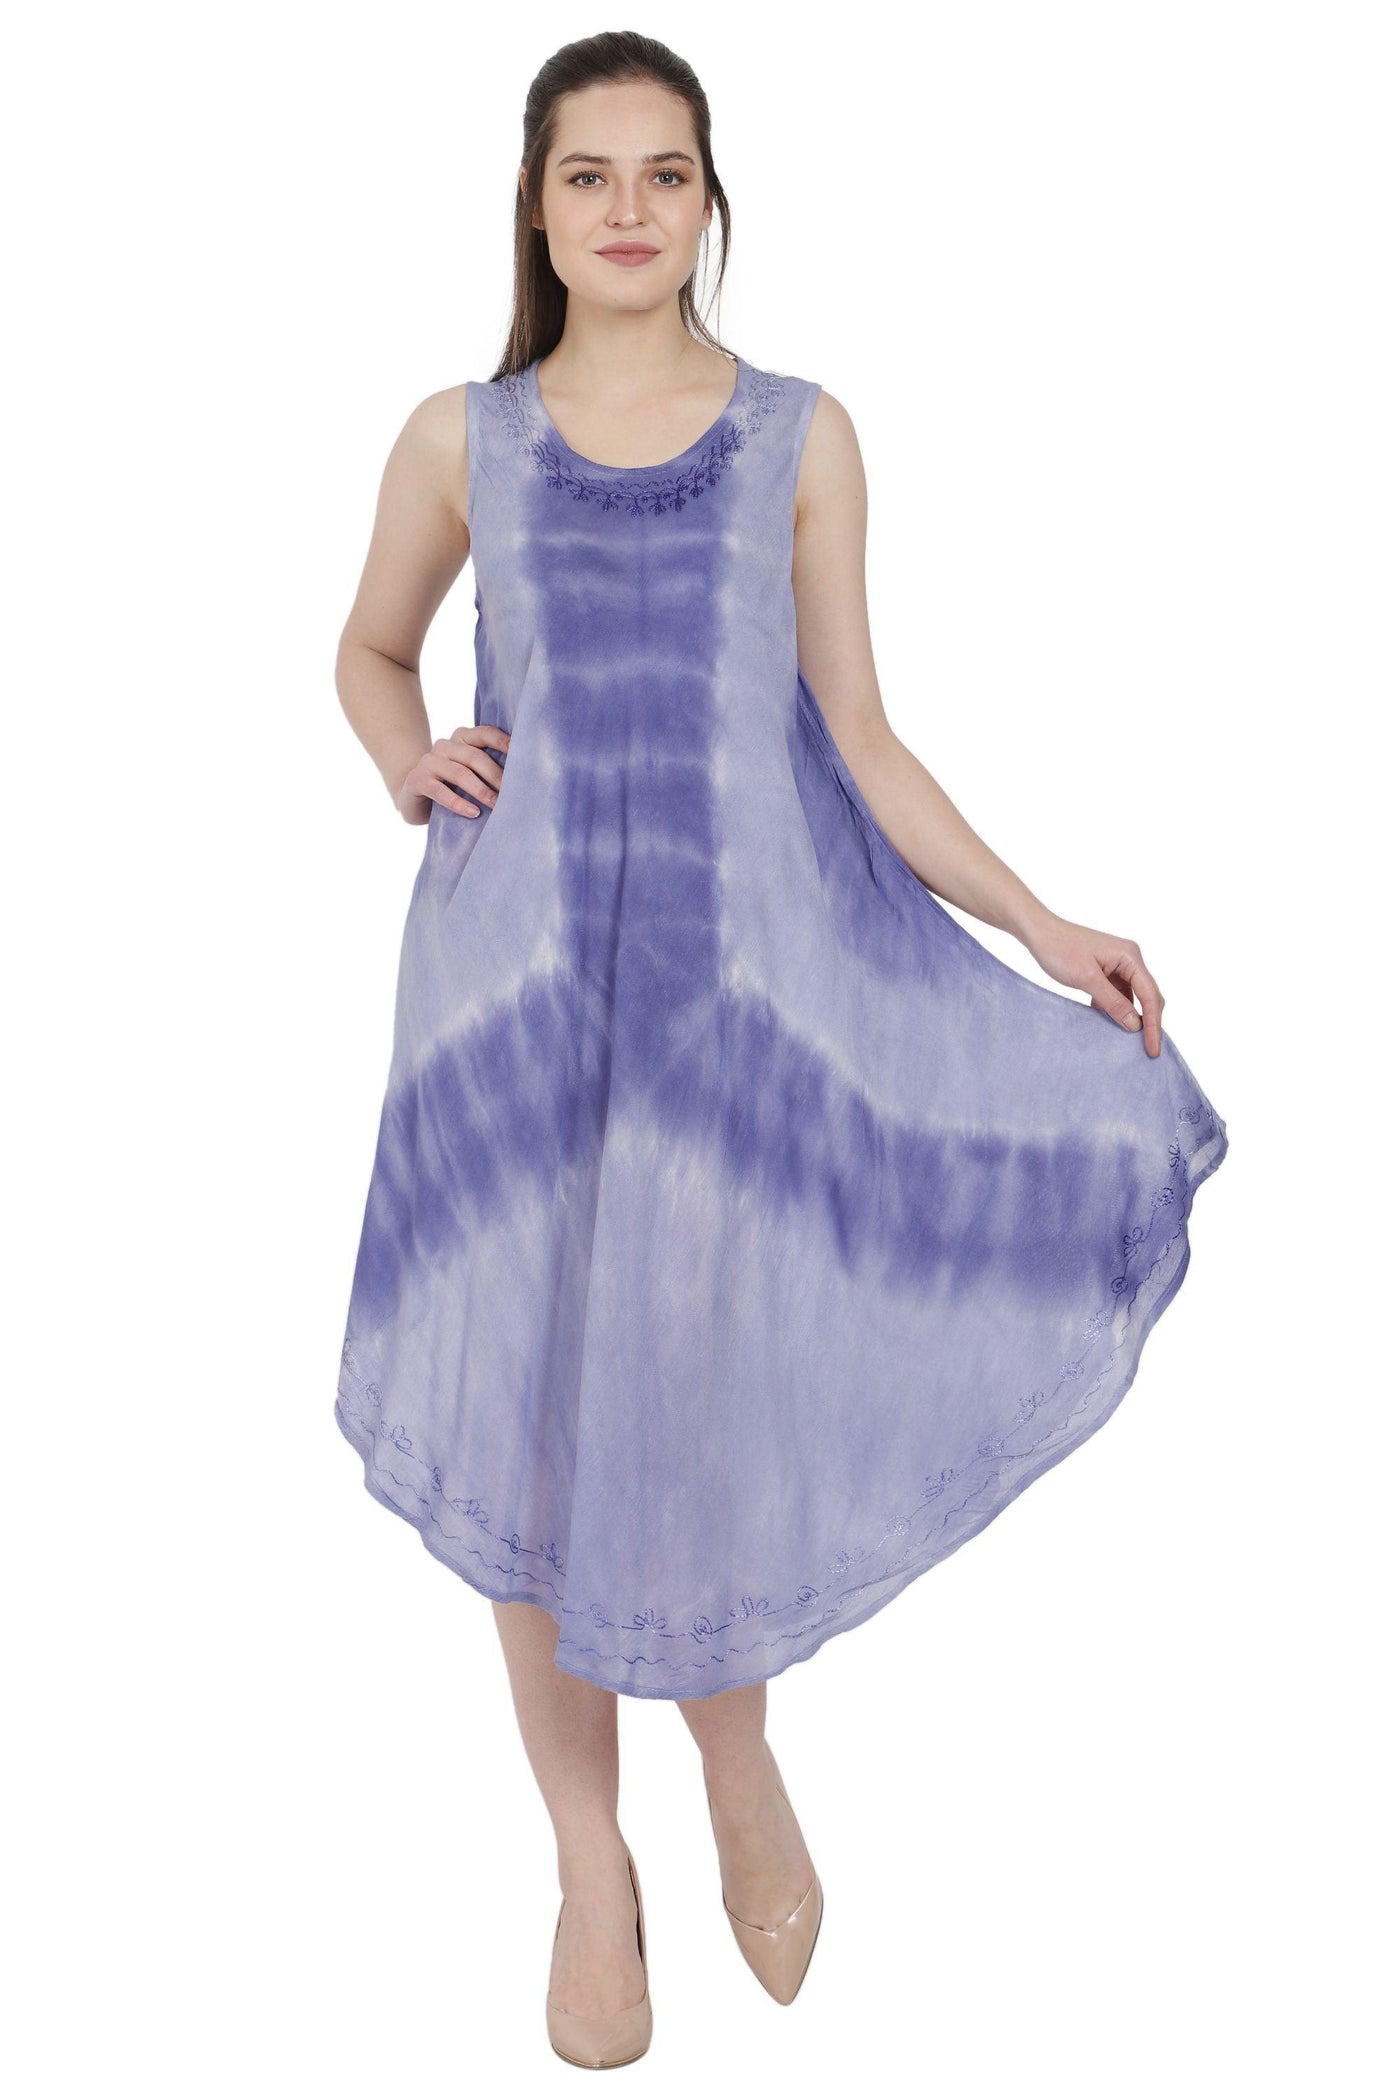 Trifecta Tie Dye Beach Umbrella Dress UD48-2304  - Advance Apparels Inc